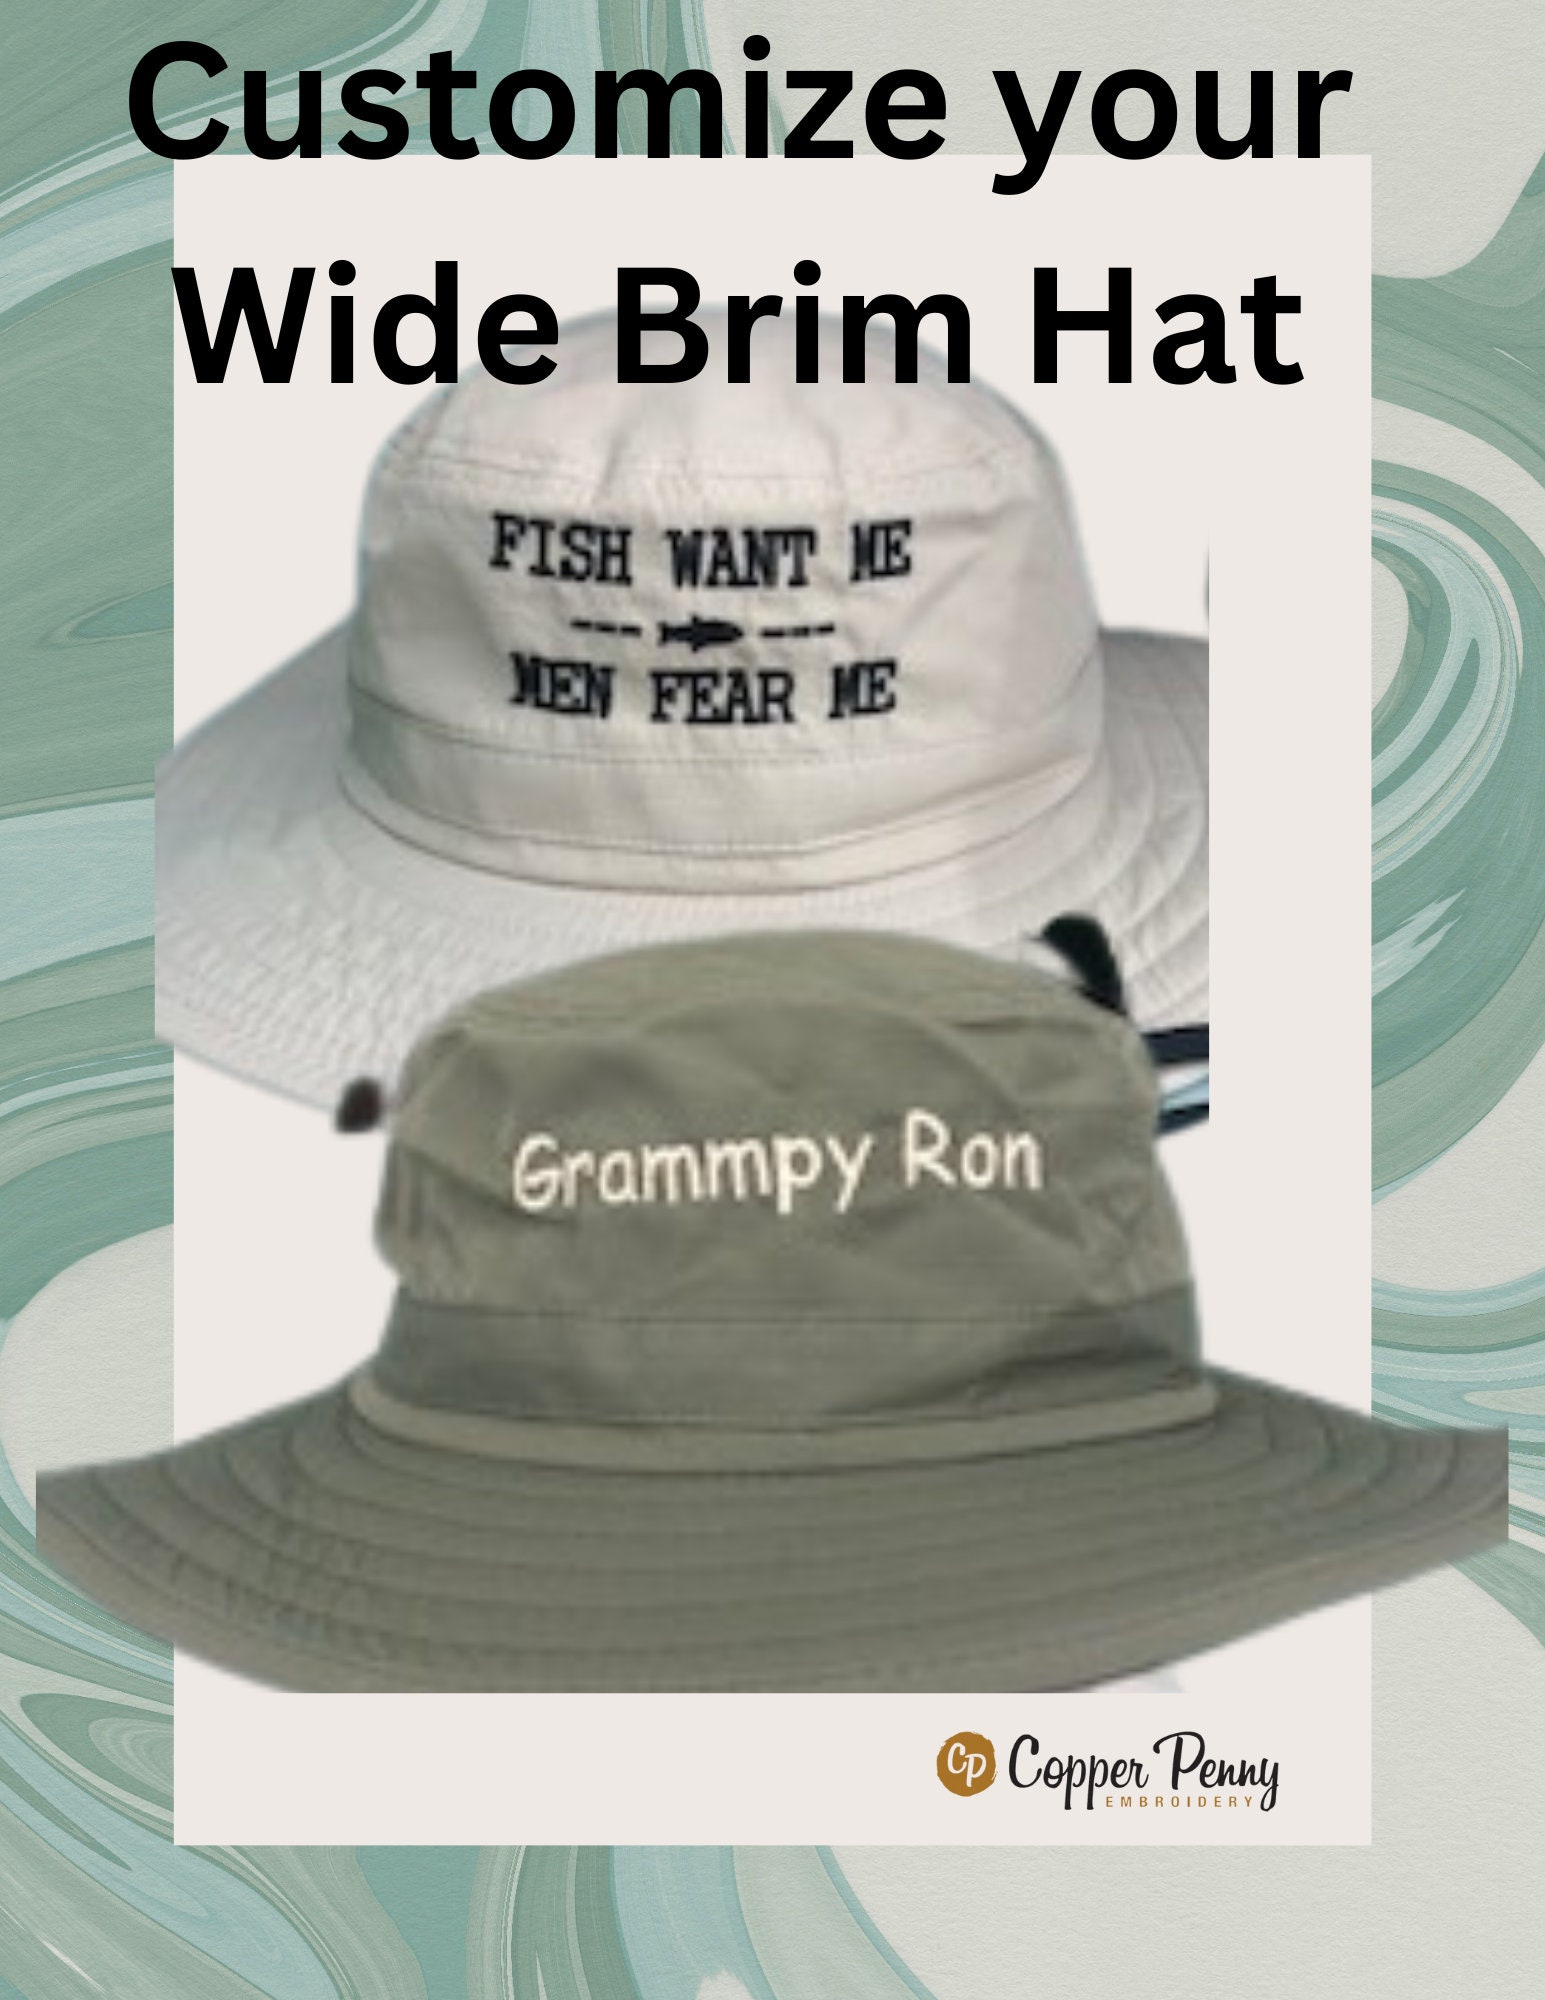 Men's Bucket Hat, Outdoor Wide-brim Hat, Hiking Hat, Travel Sun Hat, Hat  With Chin Strap, Fisherman Hat, Camping Hat, Beach Hat, Summer Caps 